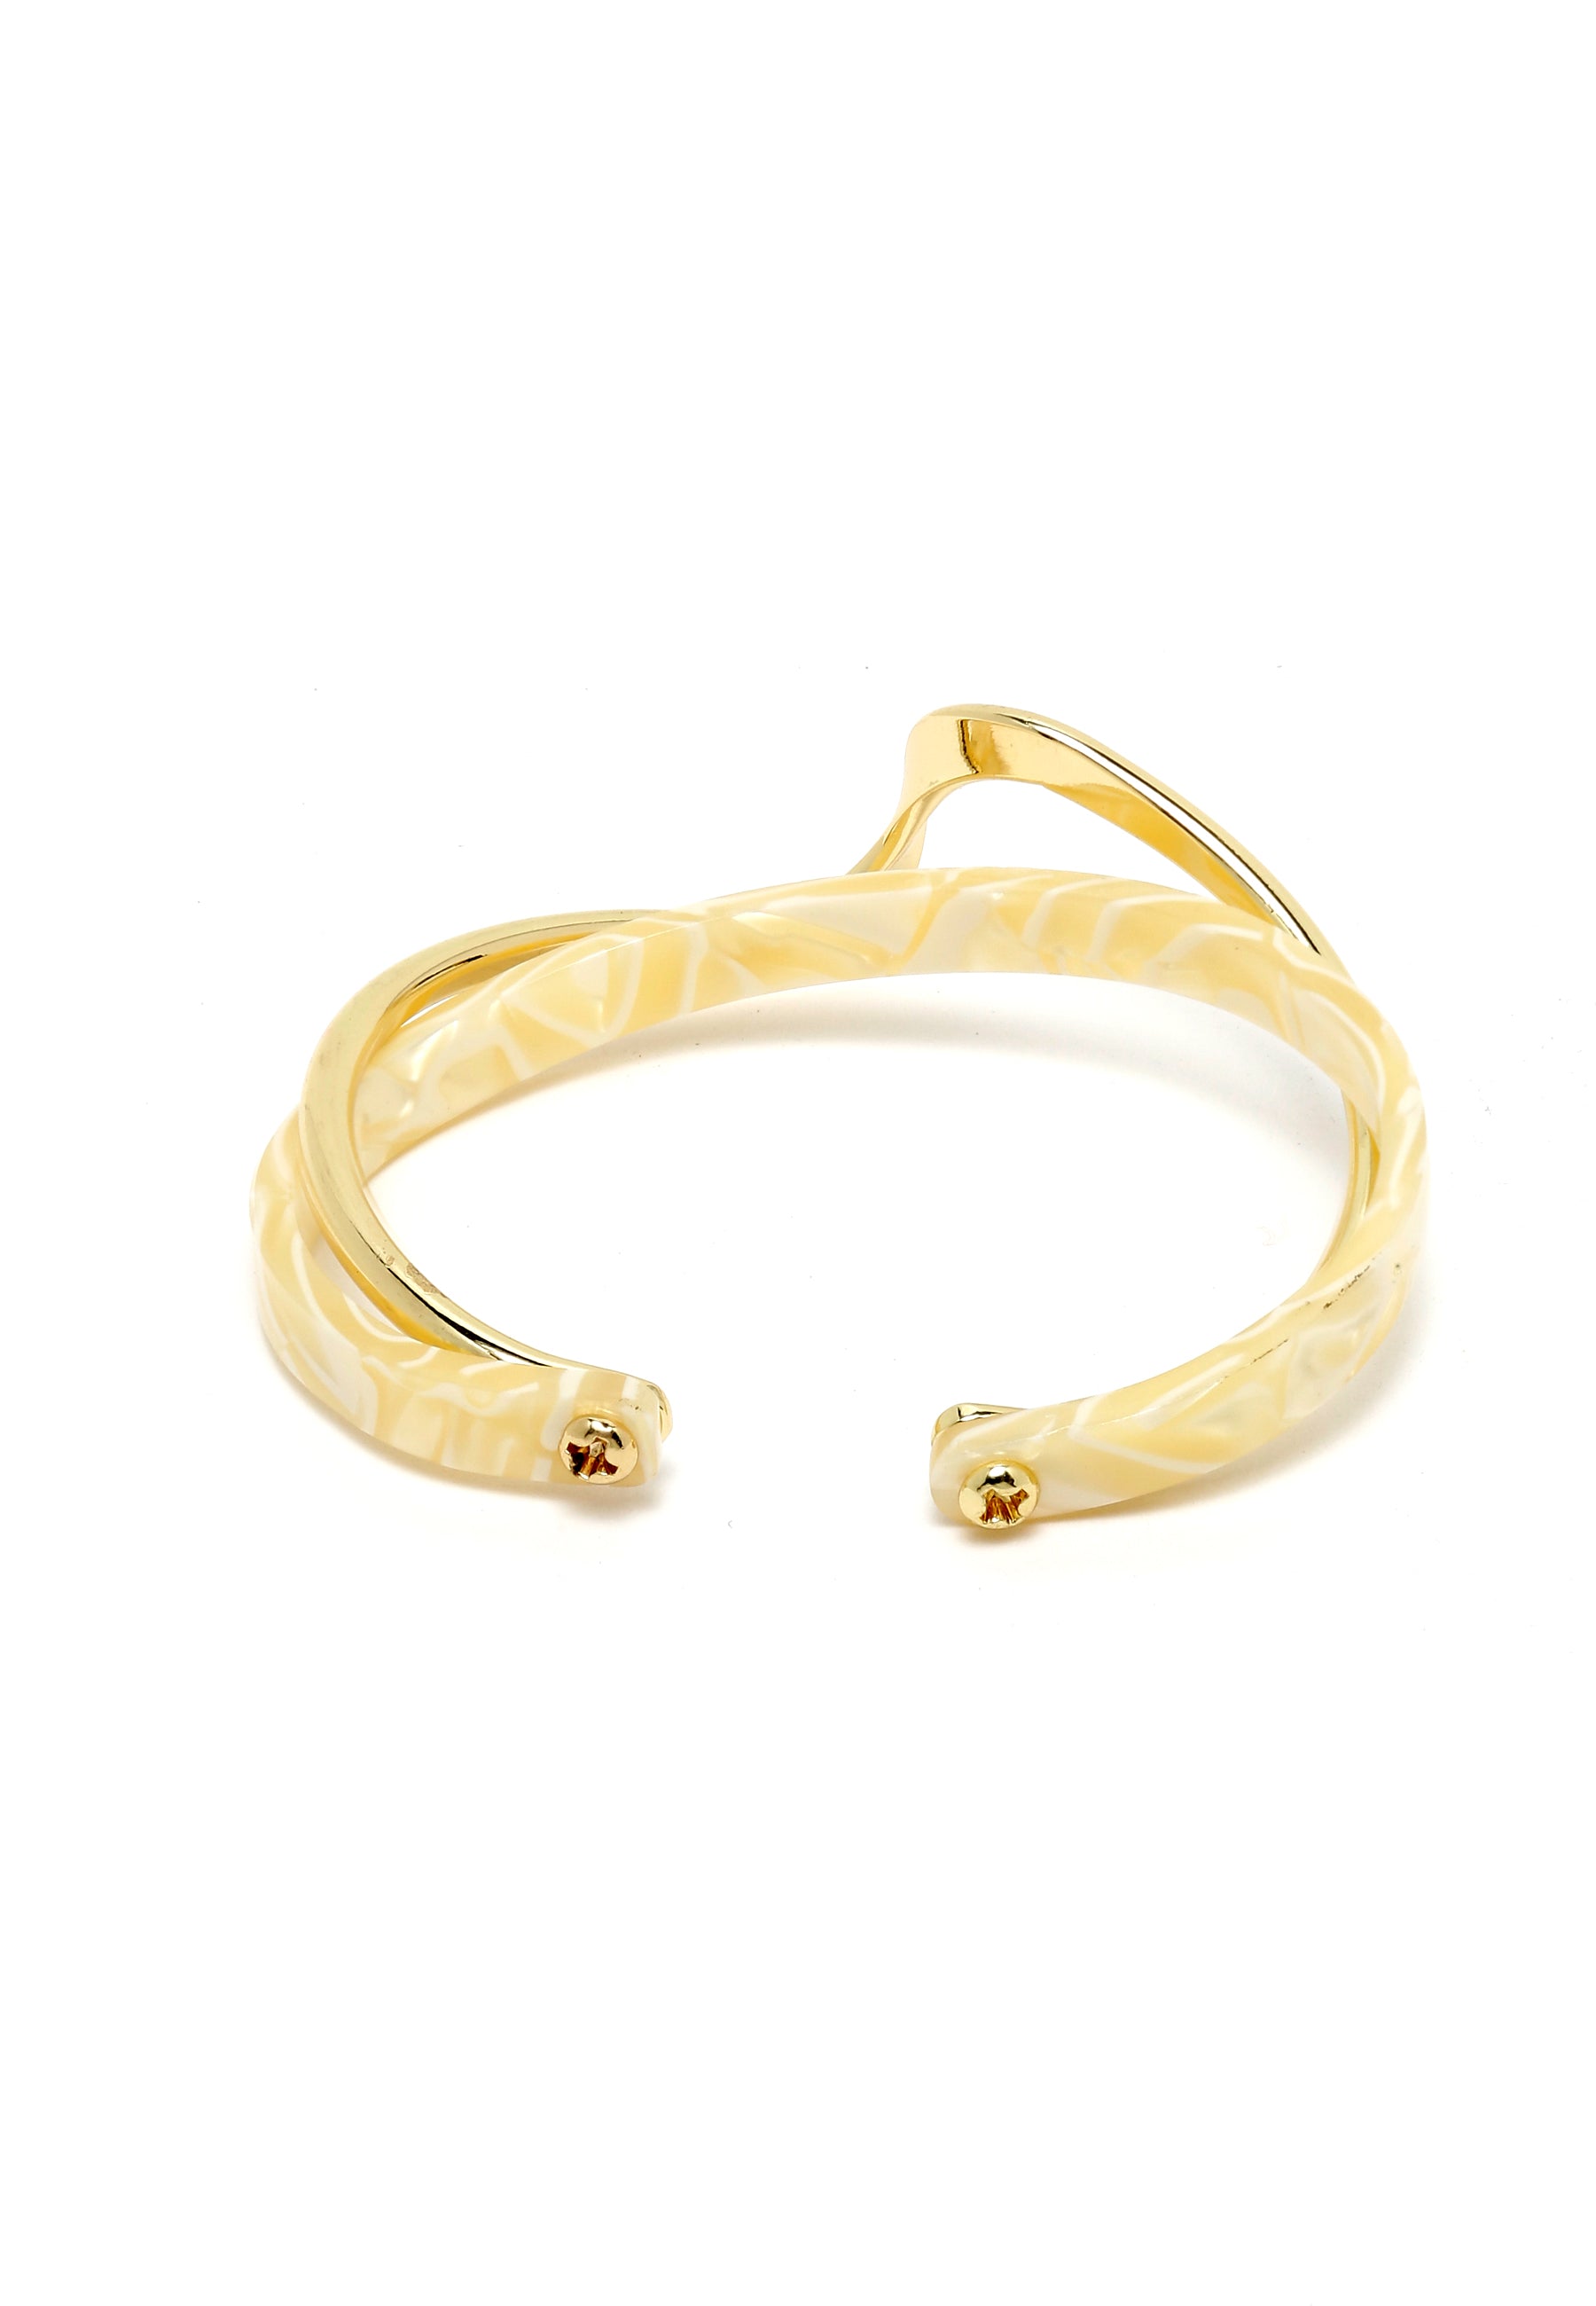 Avant-Garde Paris Elegant Gold Plated Cuff Bangle